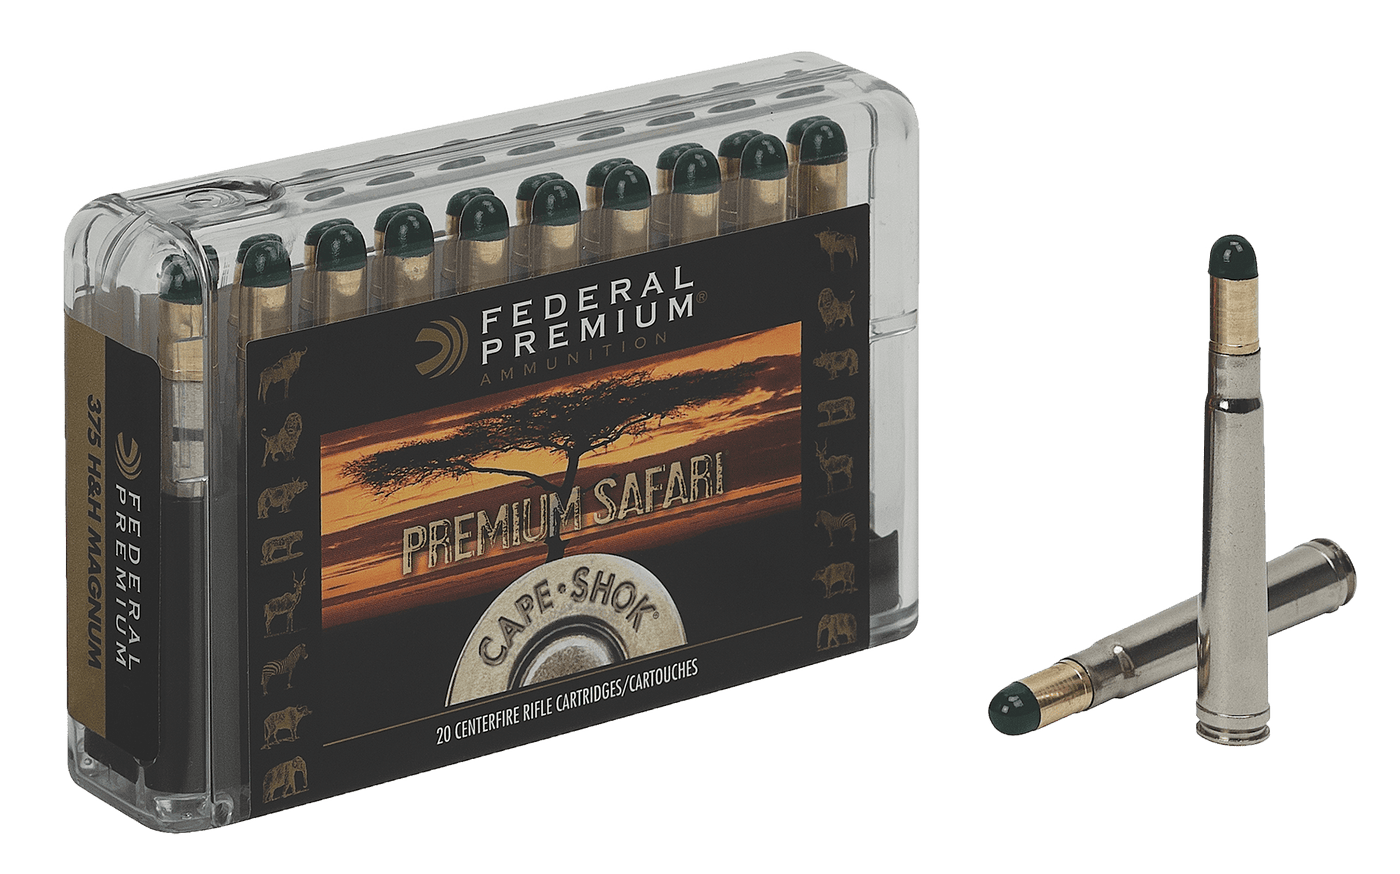 Federal Federal Premium Safari, Fed P458wh         458wn   500 Whcs          20/10 Ammo